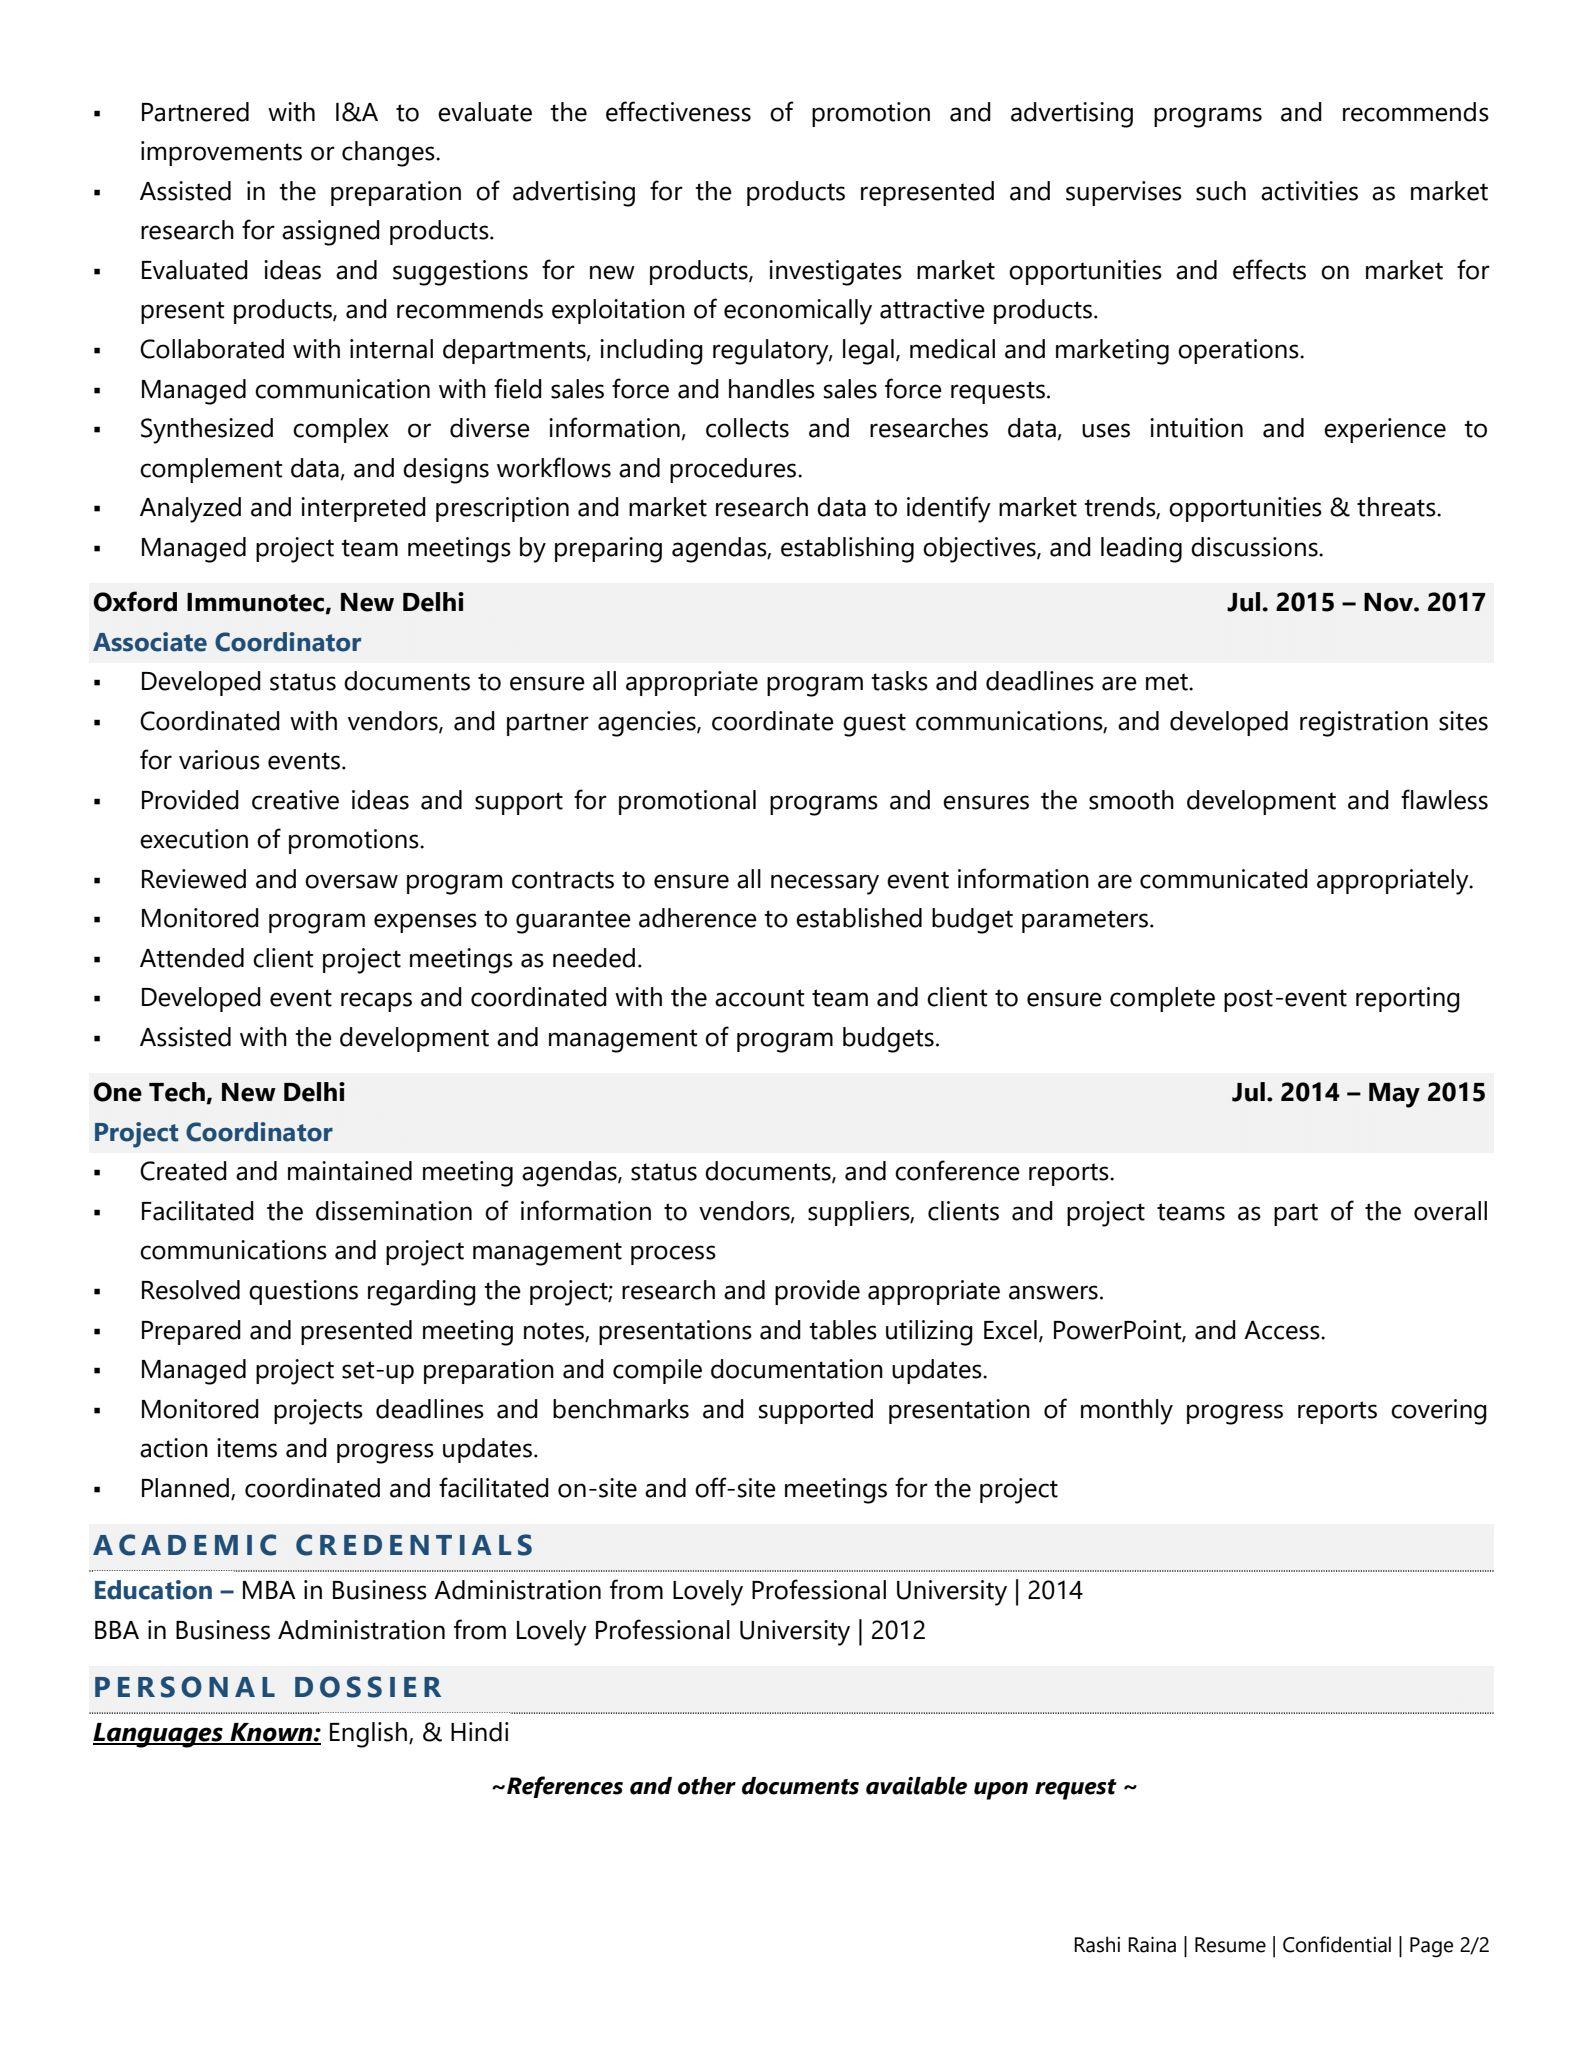 Senior Coordinator - Resume Example & Template